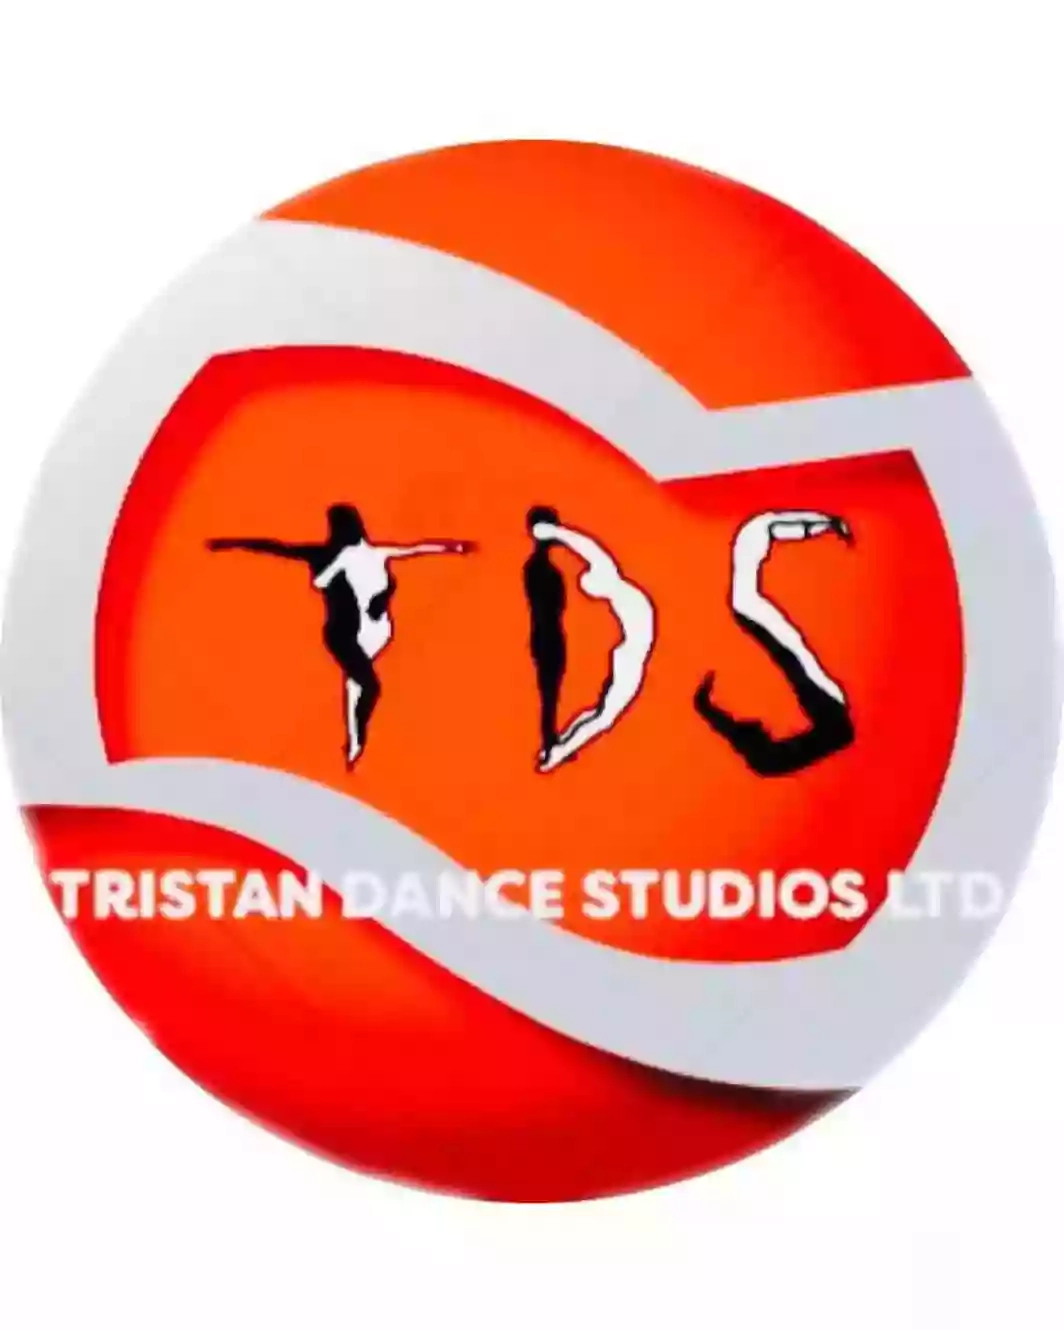 Tristan Dance Studios ltd